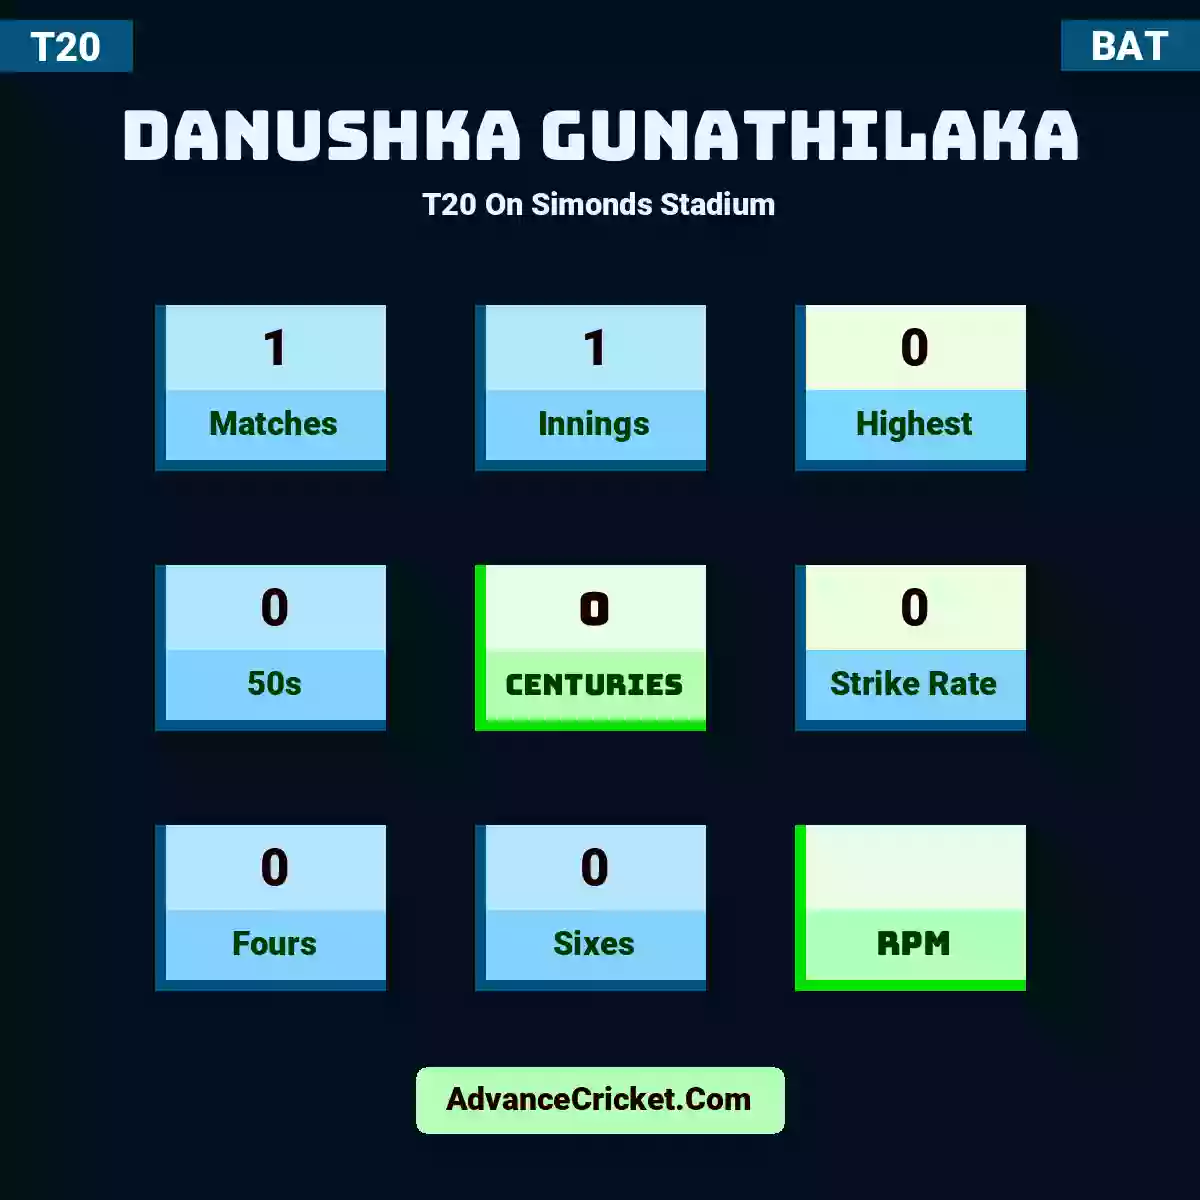 Danushka Gunathilaka T20  On Simonds Stadium, Danushka Gunathilaka played 1 matches, scored 0 runs as highest, 0 half-centuries, and 0 centuries, with a strike rate of 0. D.Gunathilaka hit 0 fours and 0 sixes.